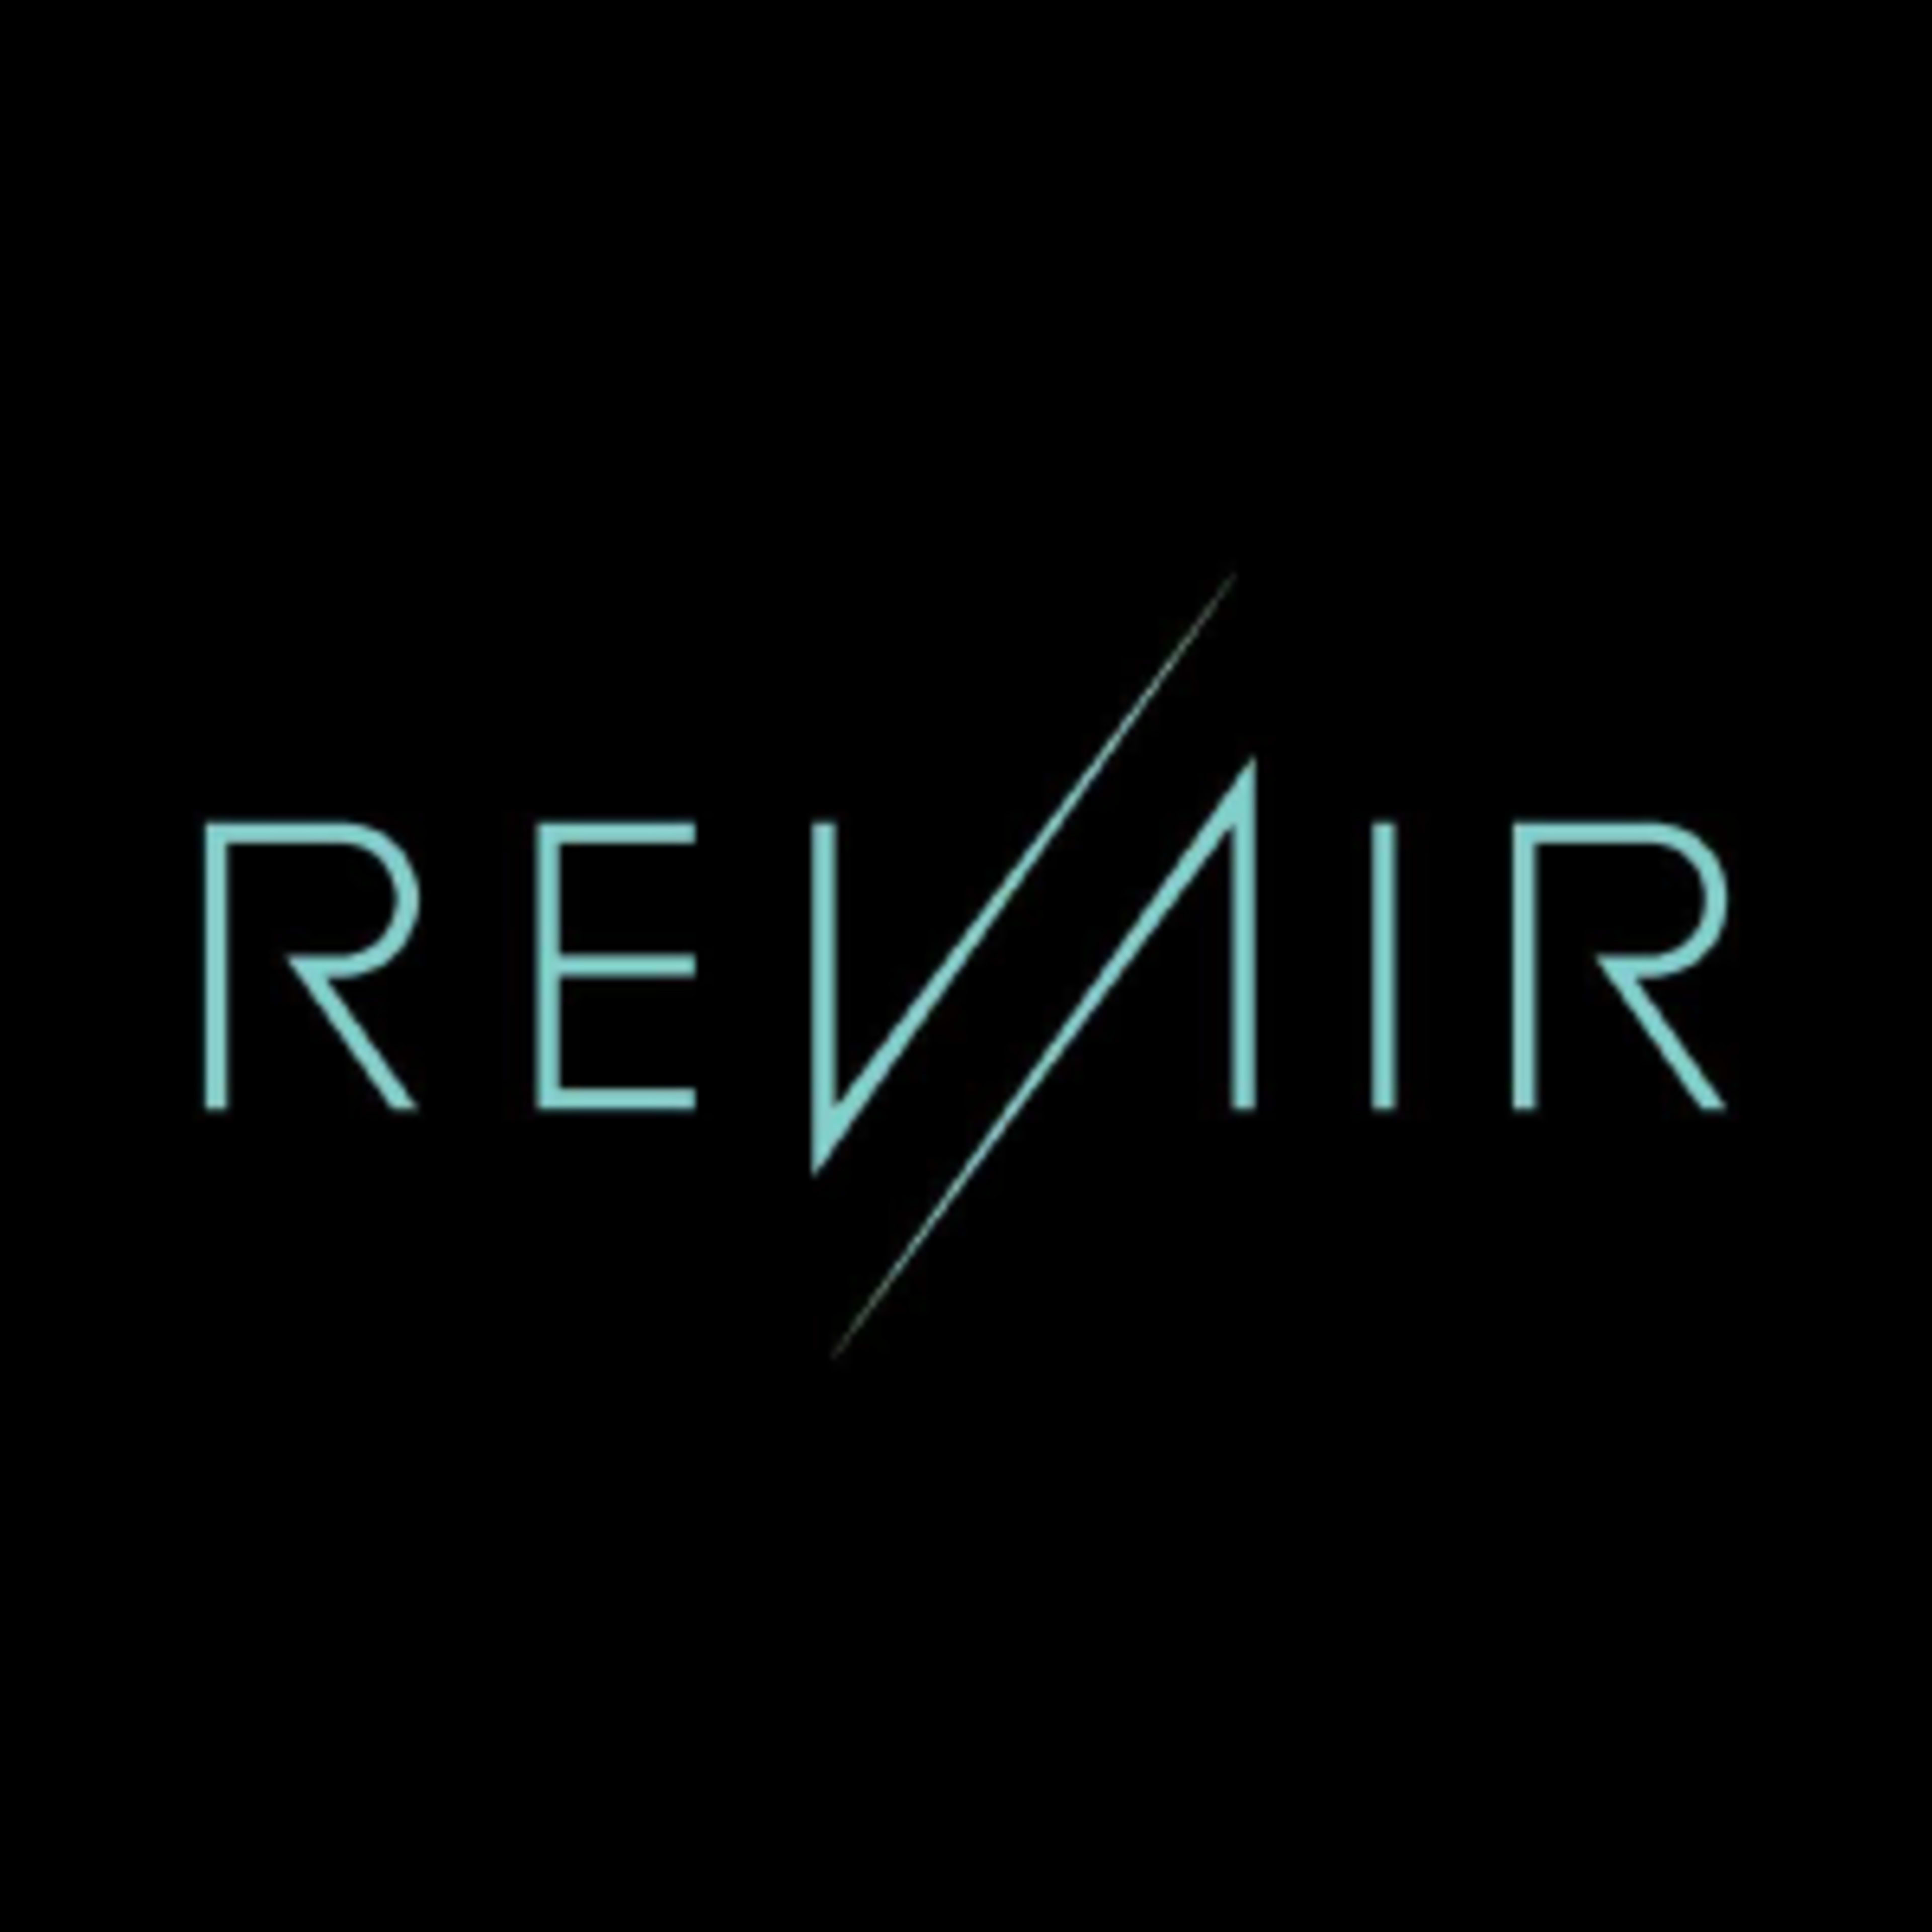 RevAir REVelerCode